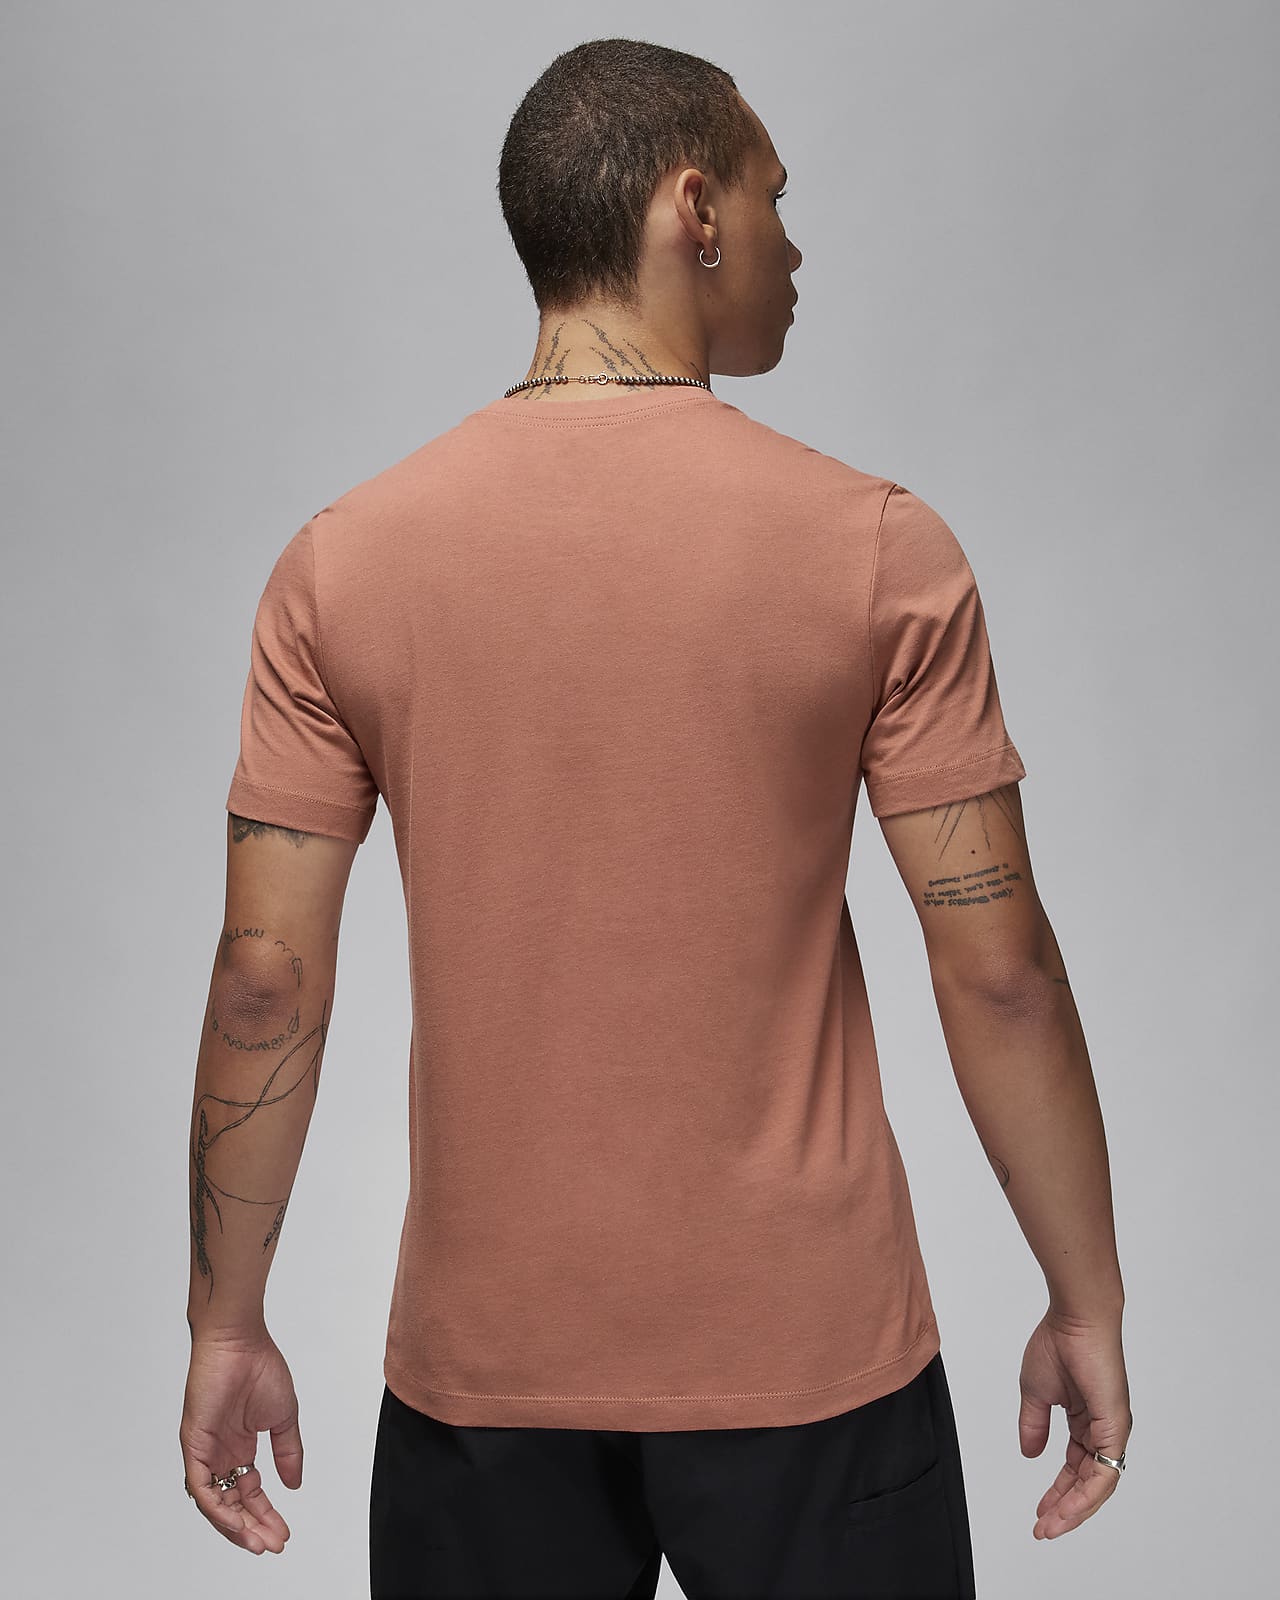 Shirts for Men, Long & Short Sleeve Shirts